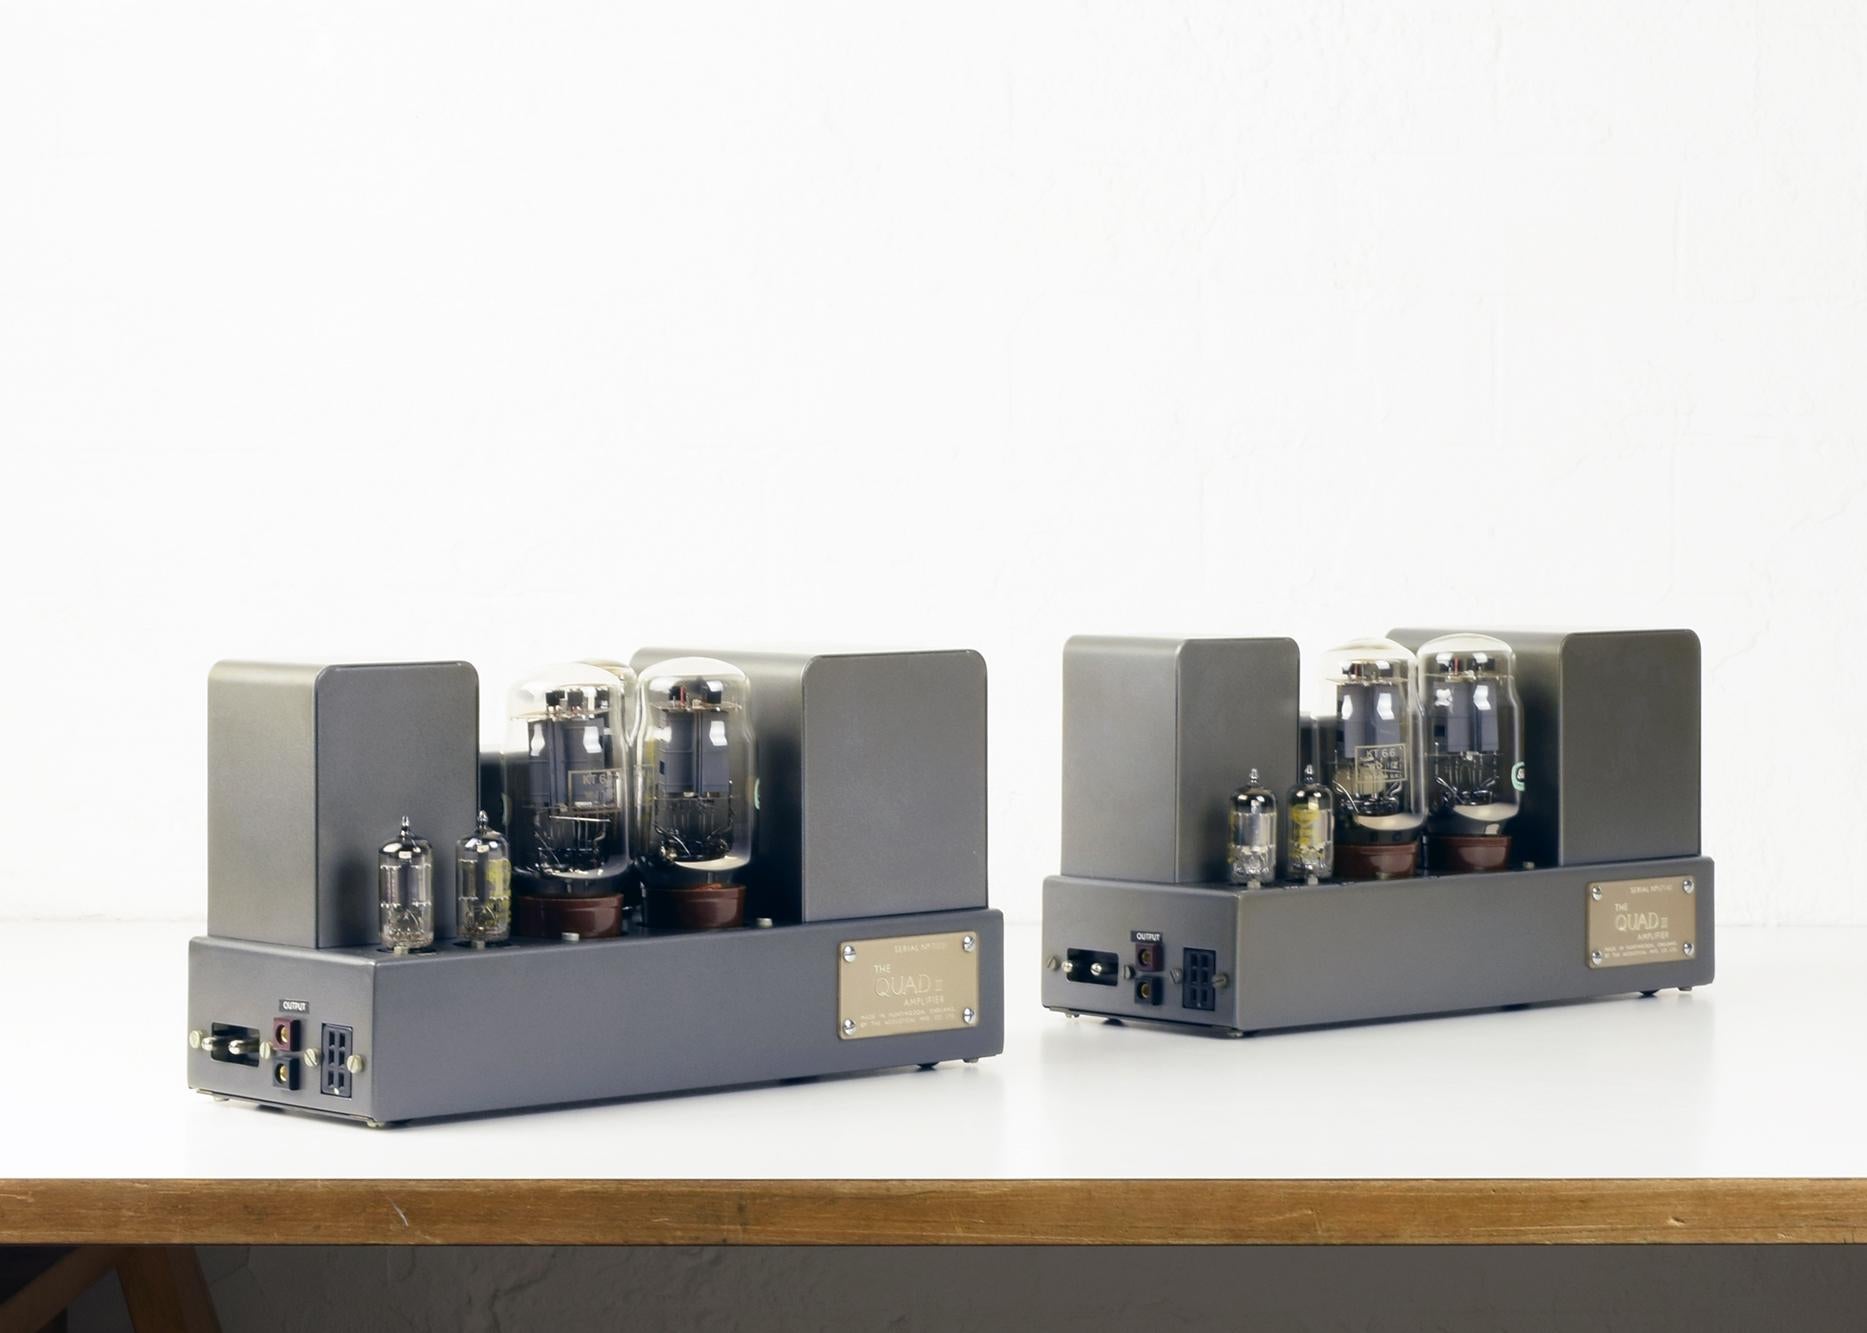 Quad II Amplifiers, 1953, Superb Pair of Power Amps, Original KT66 Valves/Tubes 1